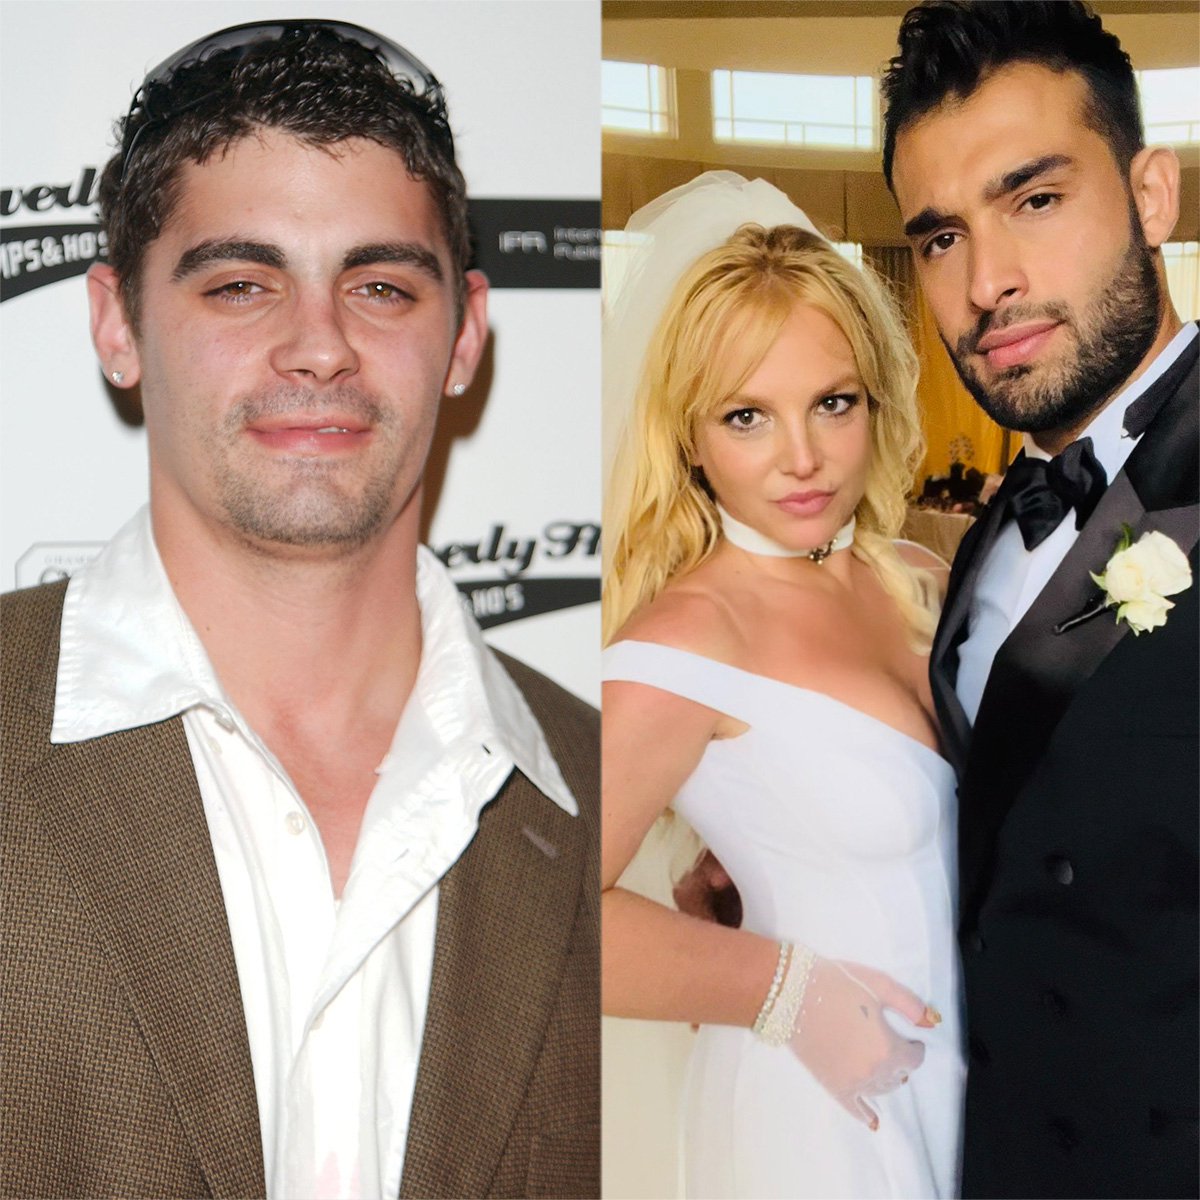 Jason Alexander, Arrested at Britney Spears’ Wedding, Has Past Warrant